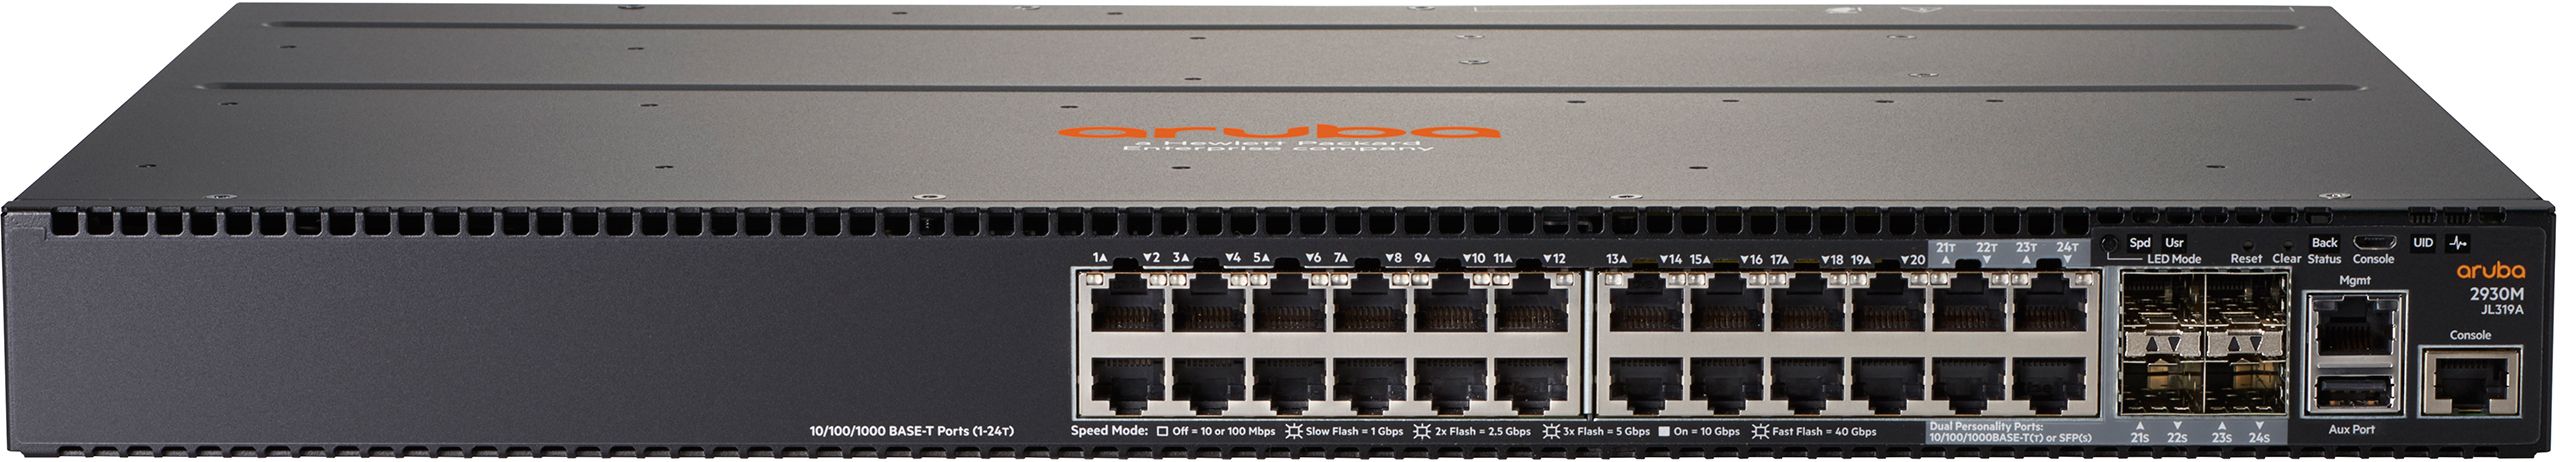 HPE Aruba 2930M 24G 1-slot Switch